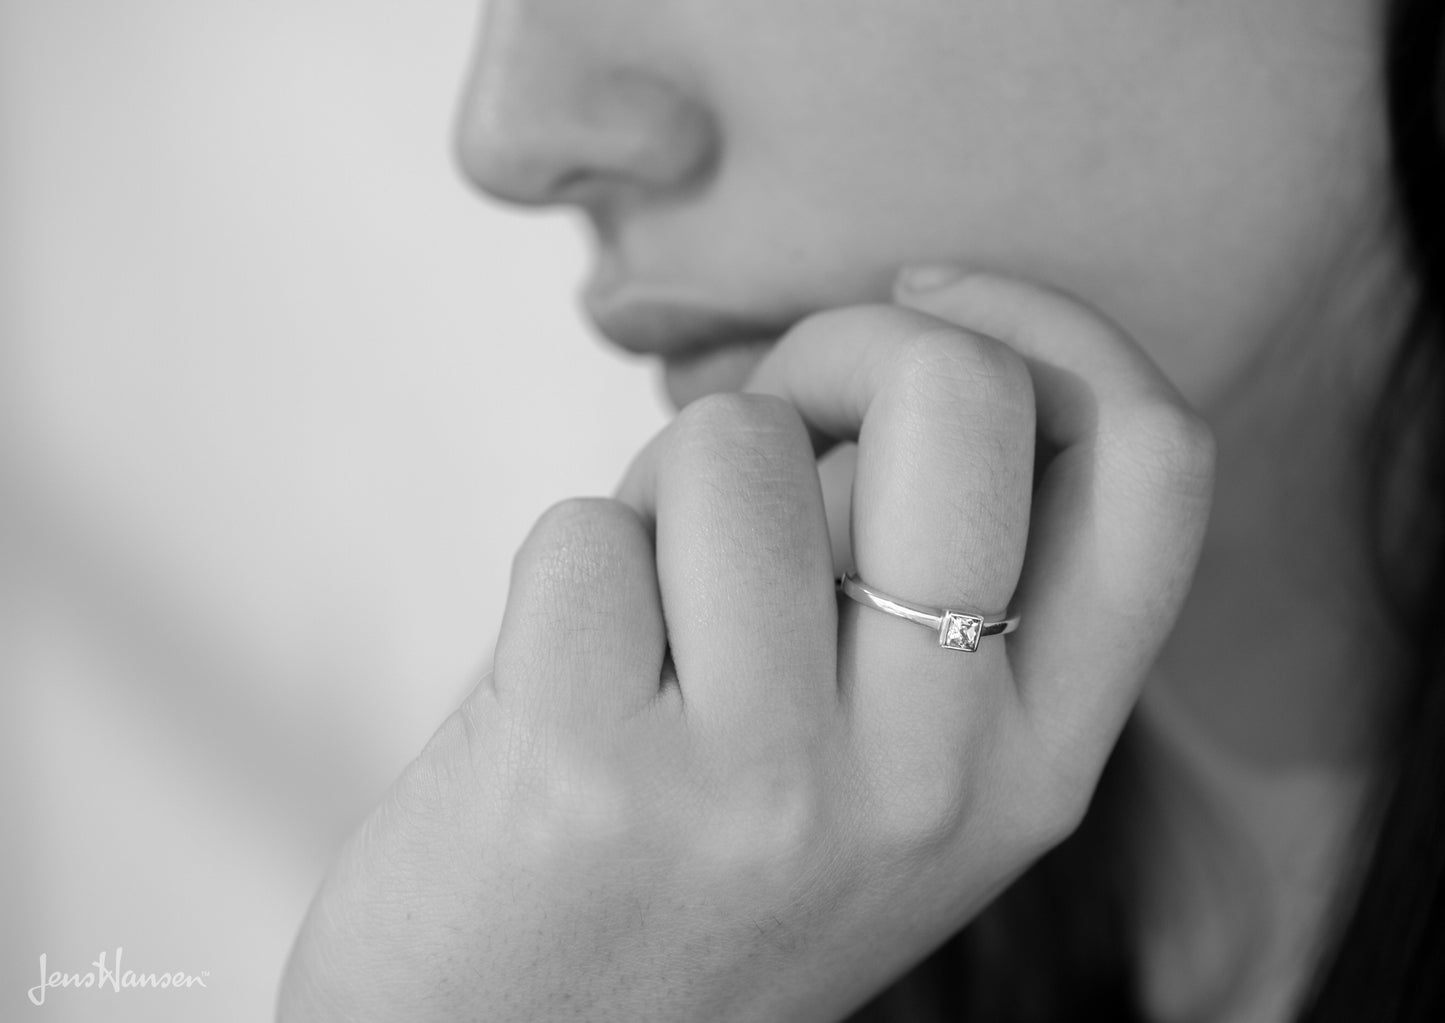 Princess Diamond Solitaire Ring, White Gold & Platinum